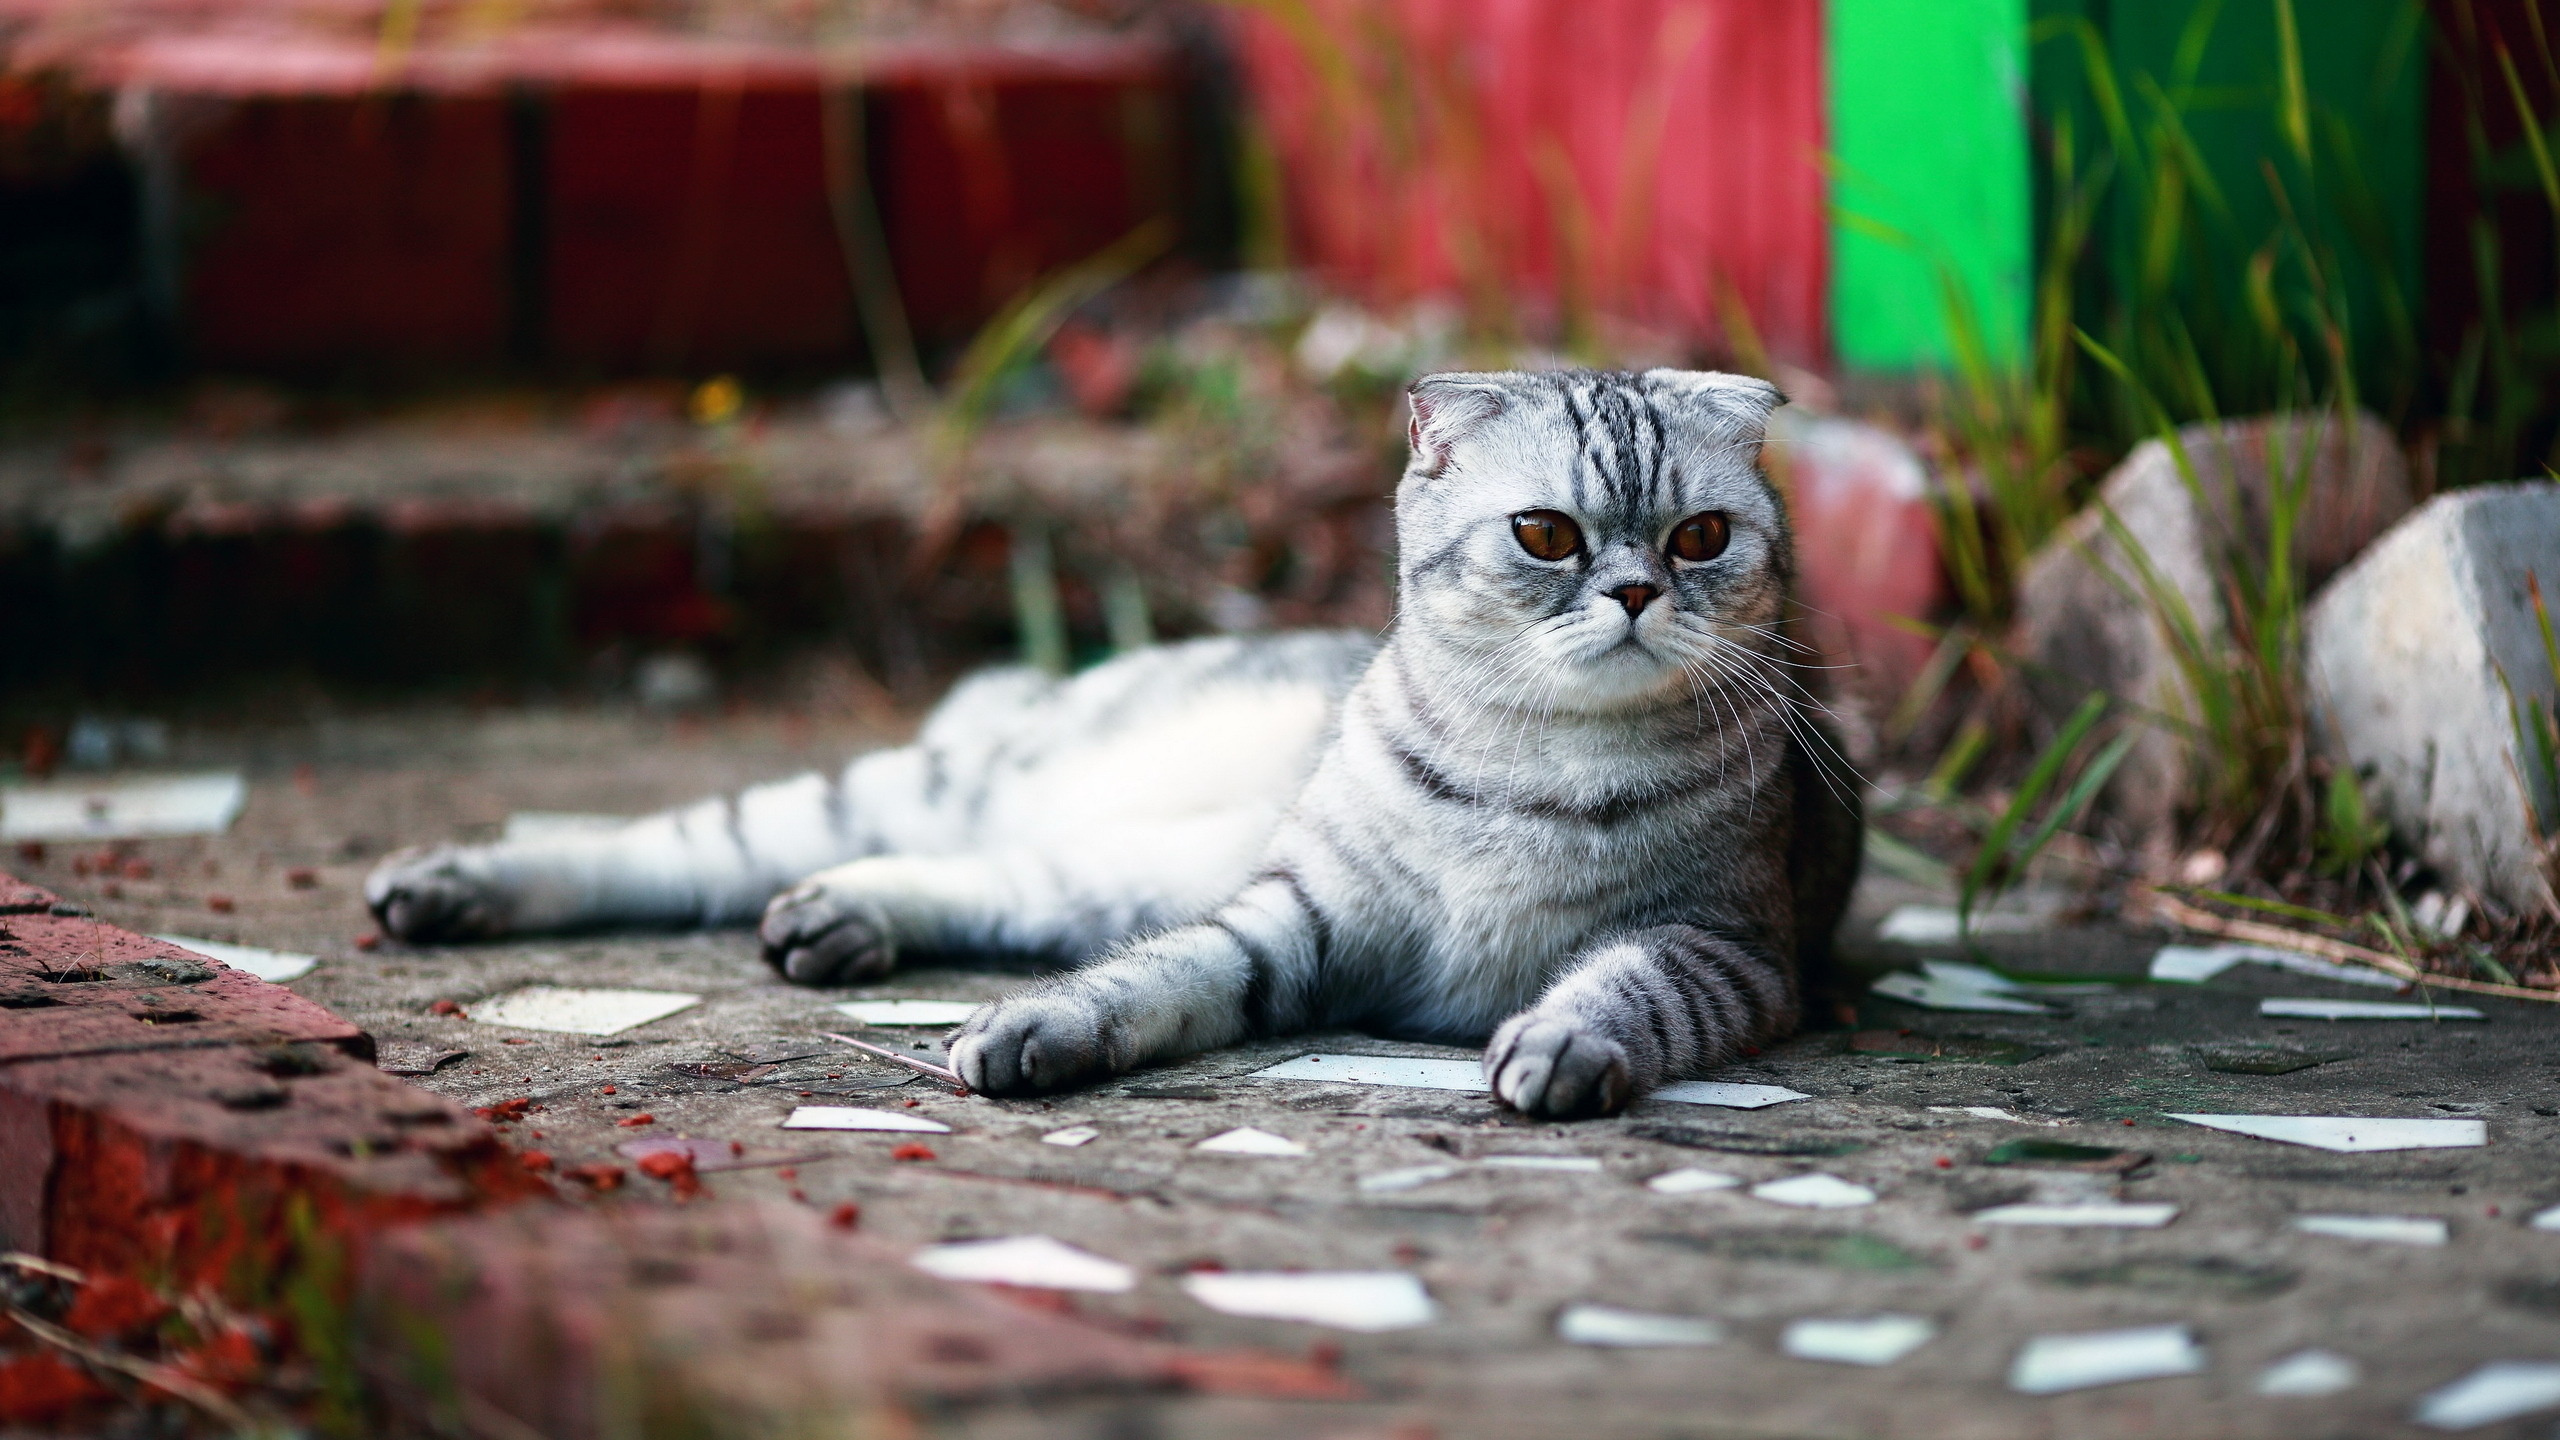 Silver Tabby Cat Allongé Sur un Sol en Béton. Wallpaper in 2560x1440 Resolution